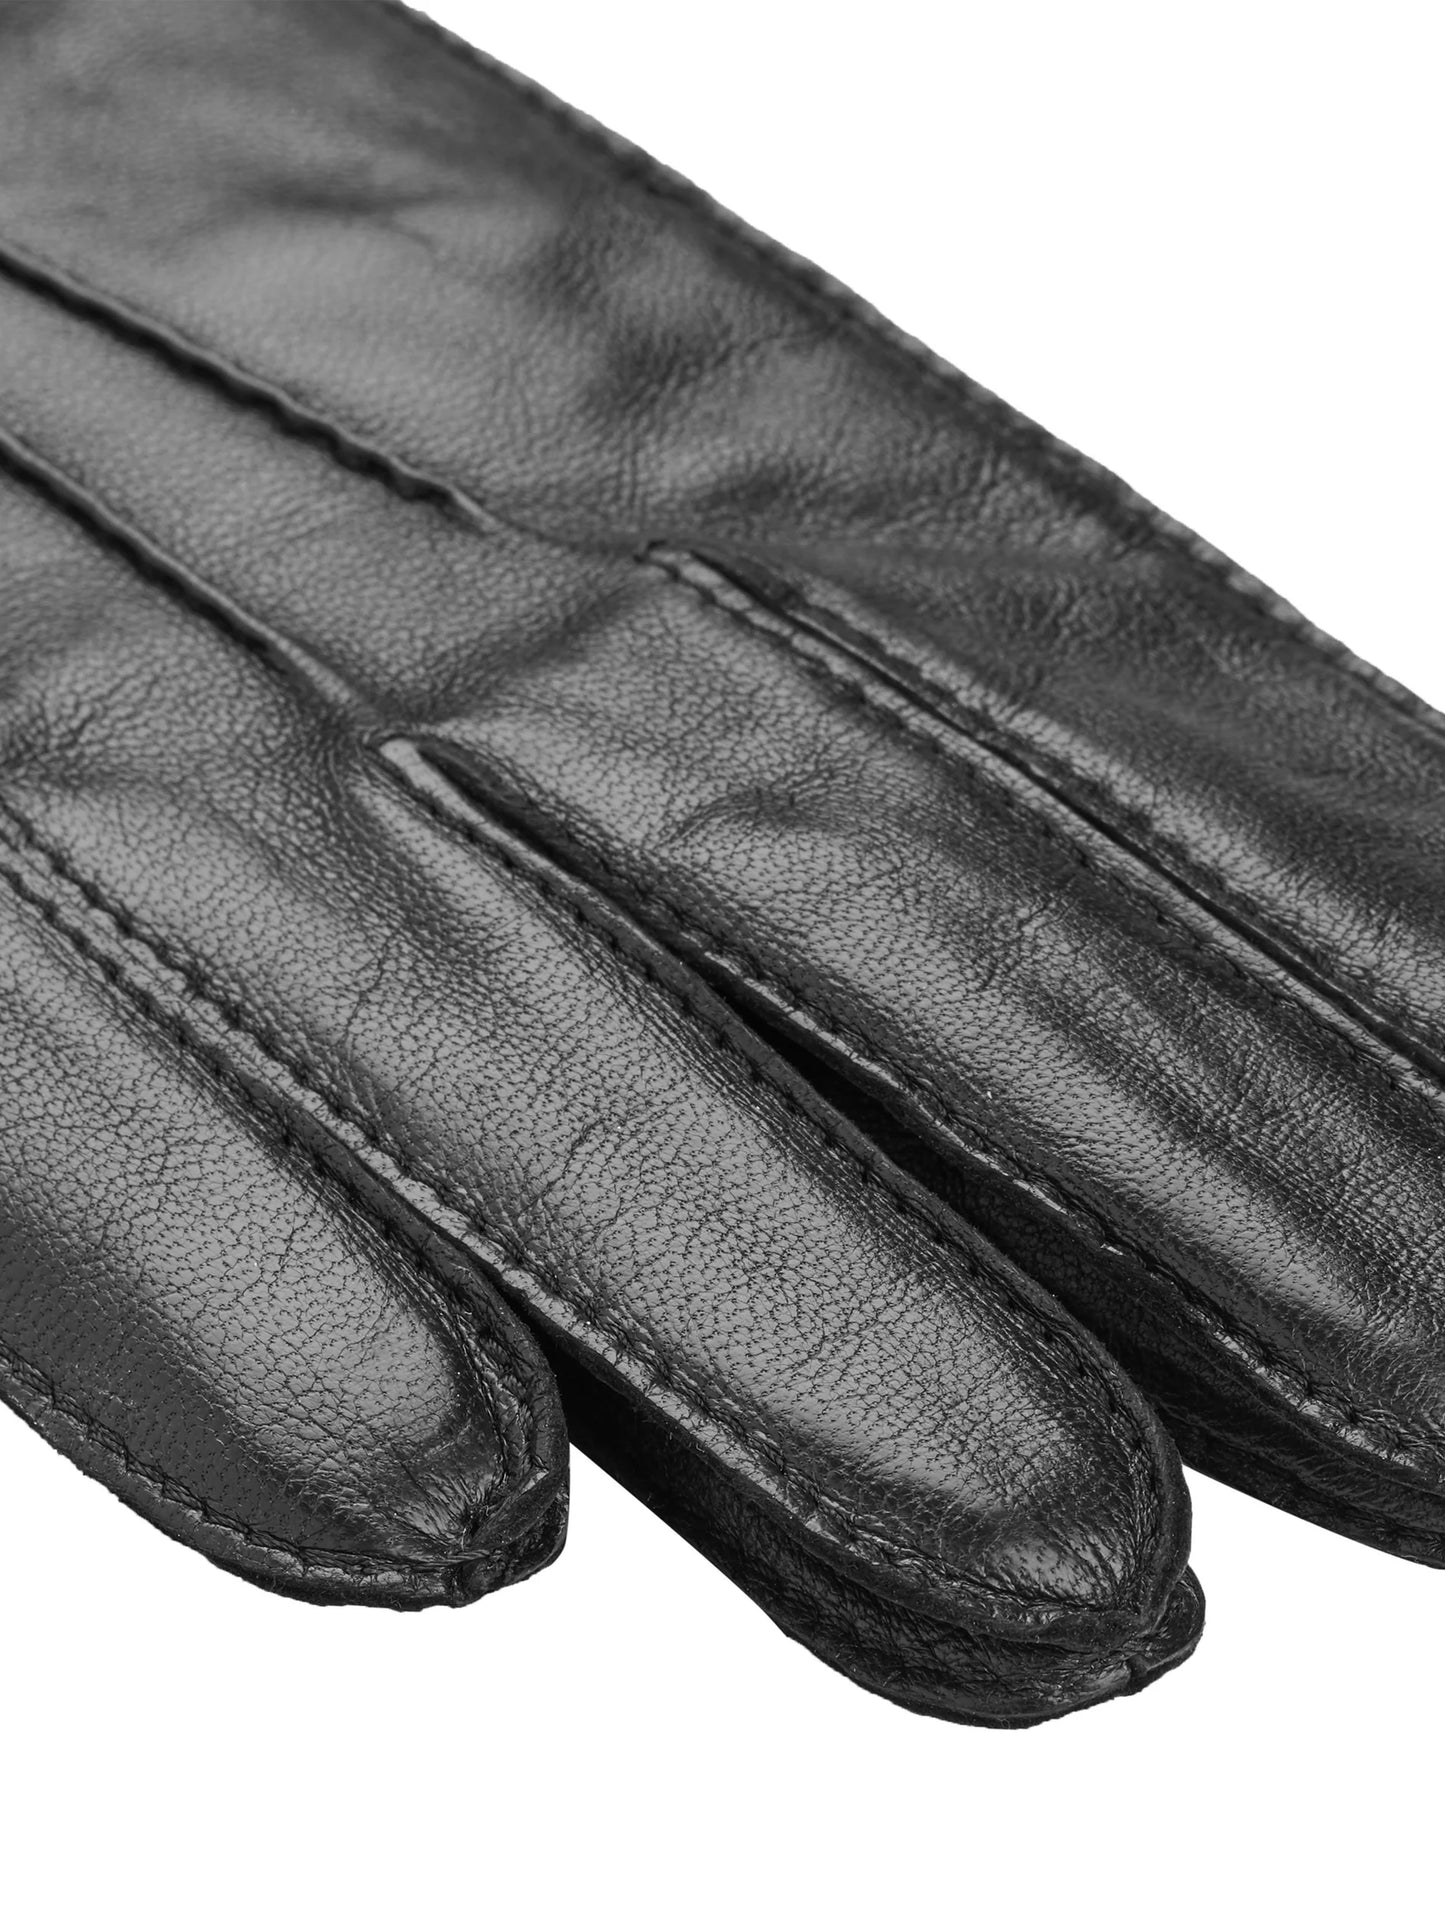 Italian Leather Black Gloves